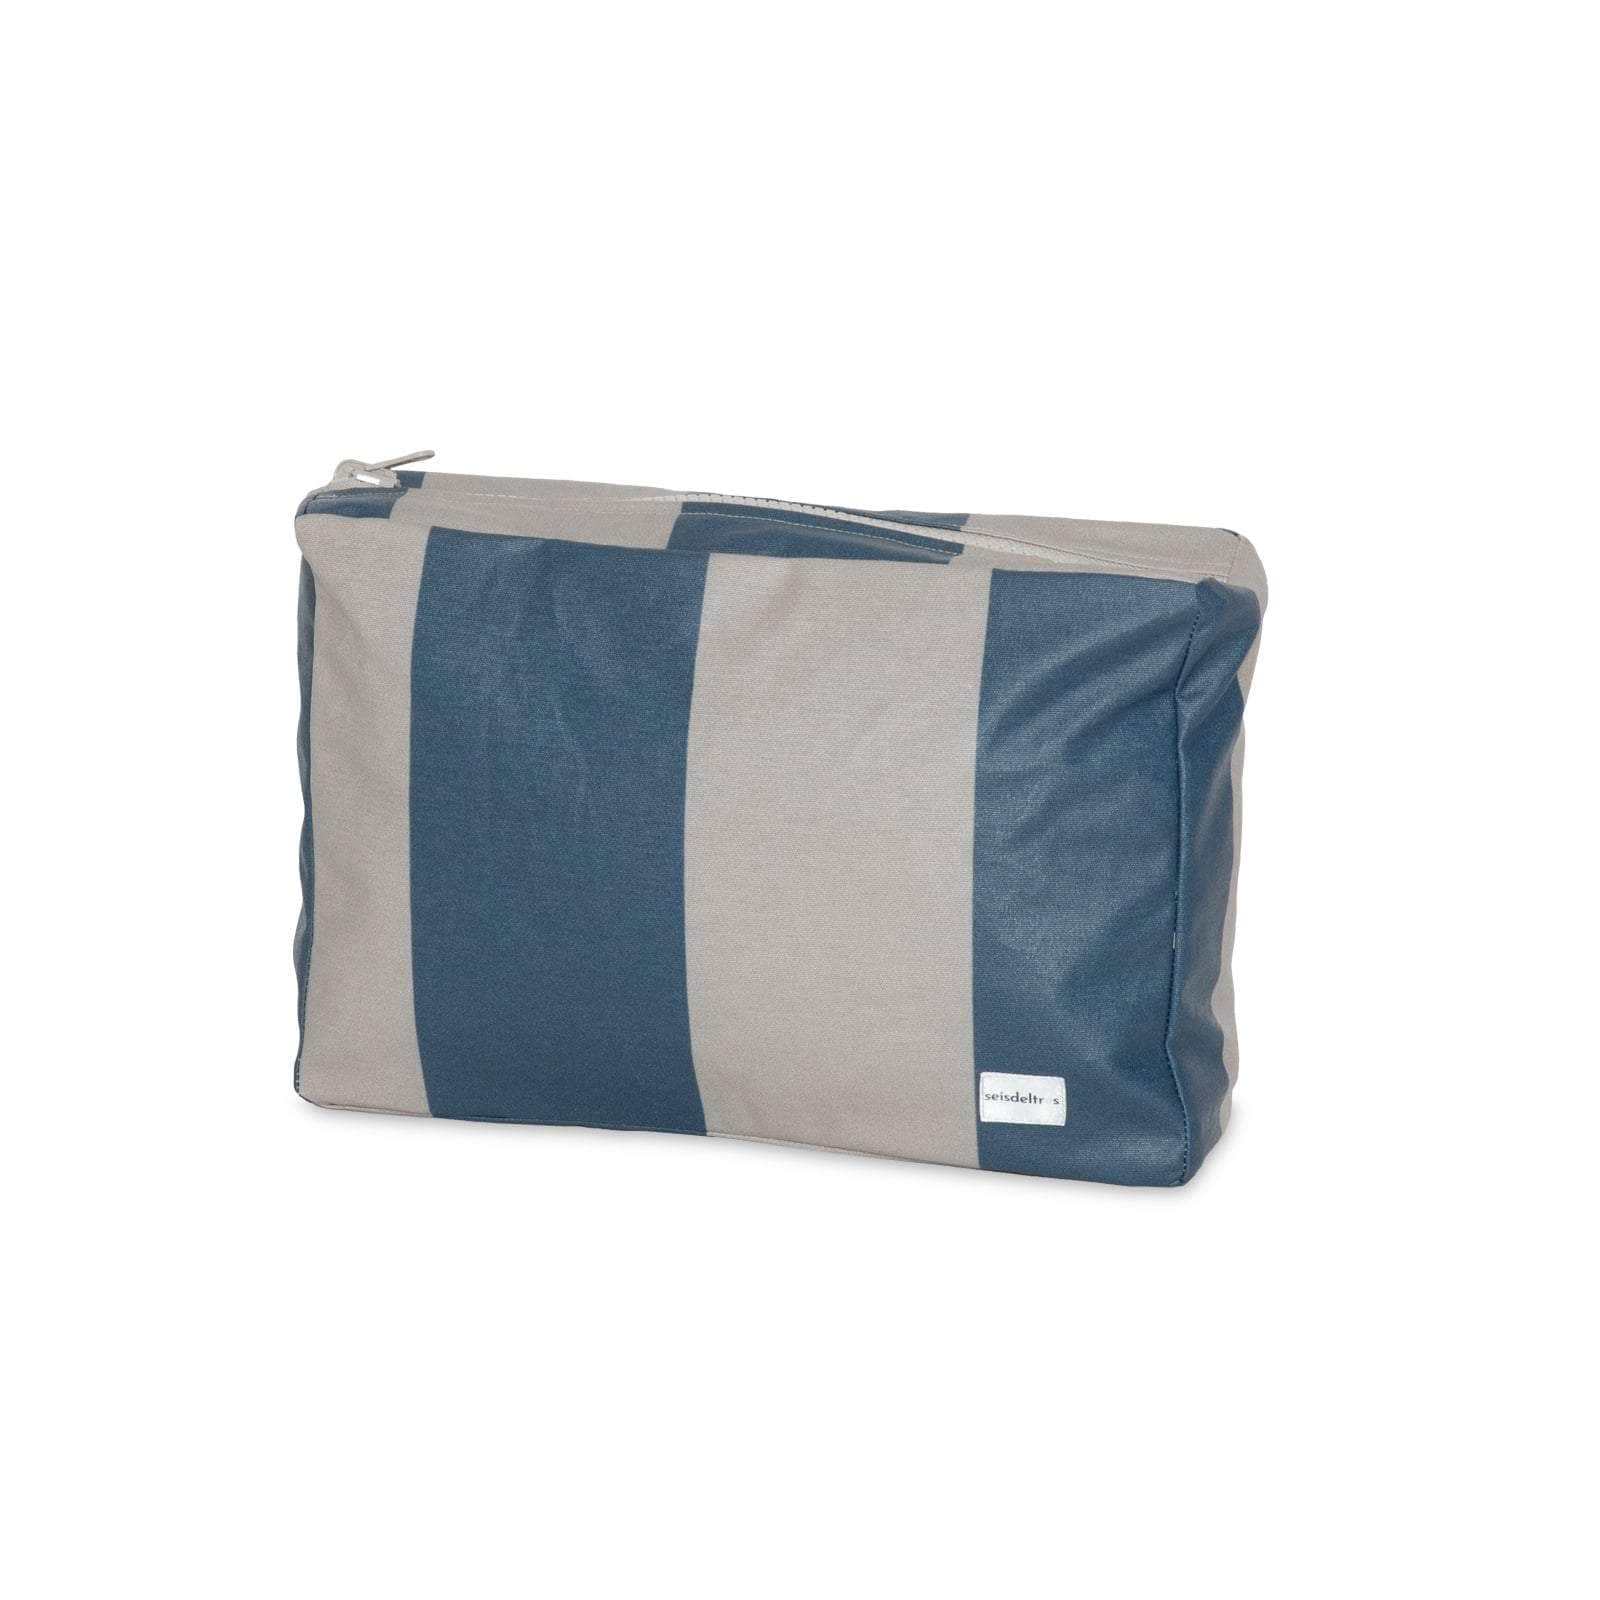 pack mybigbag Pack completo - bolsa L, bolsa XL y neceser - Petrol/Piedra